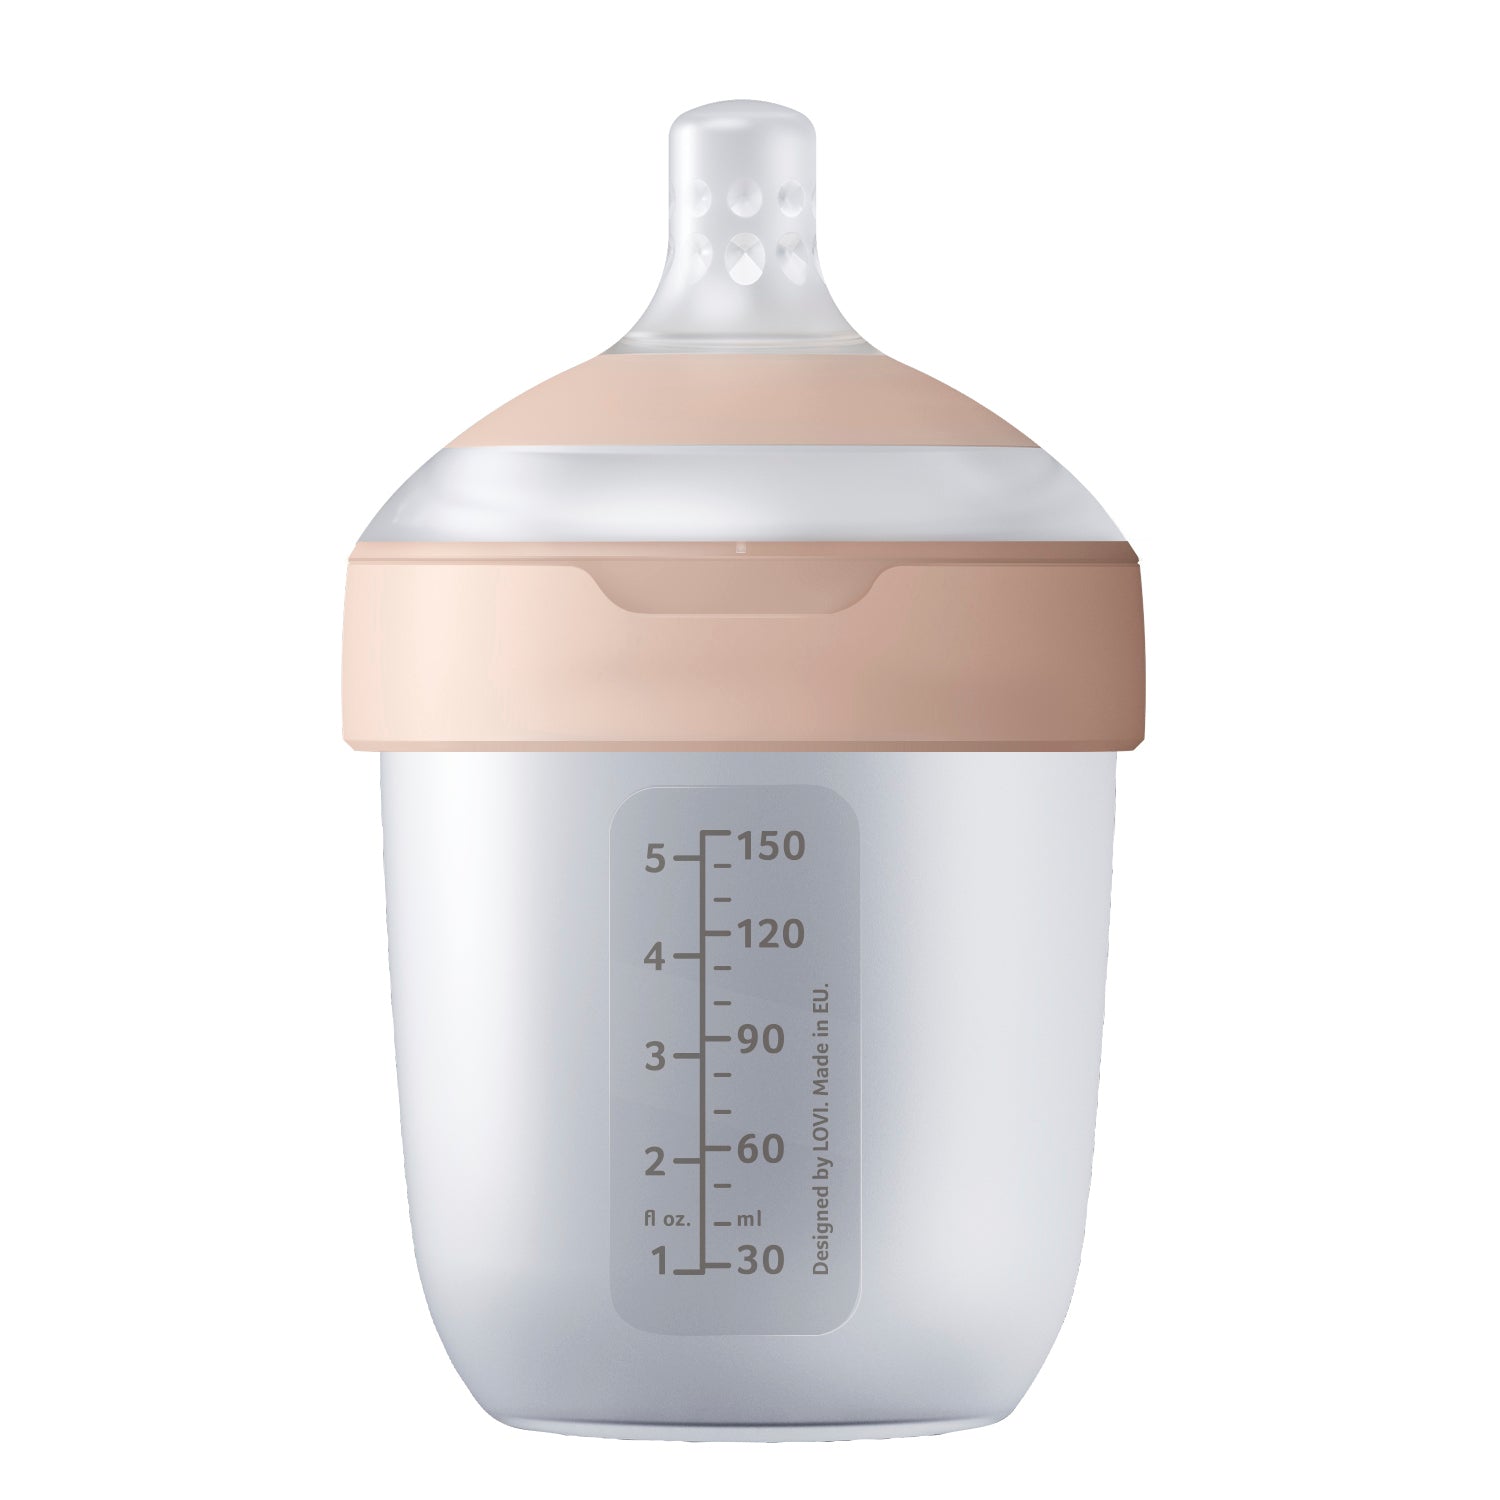 Mammafeel-Babyflasche 150 ml